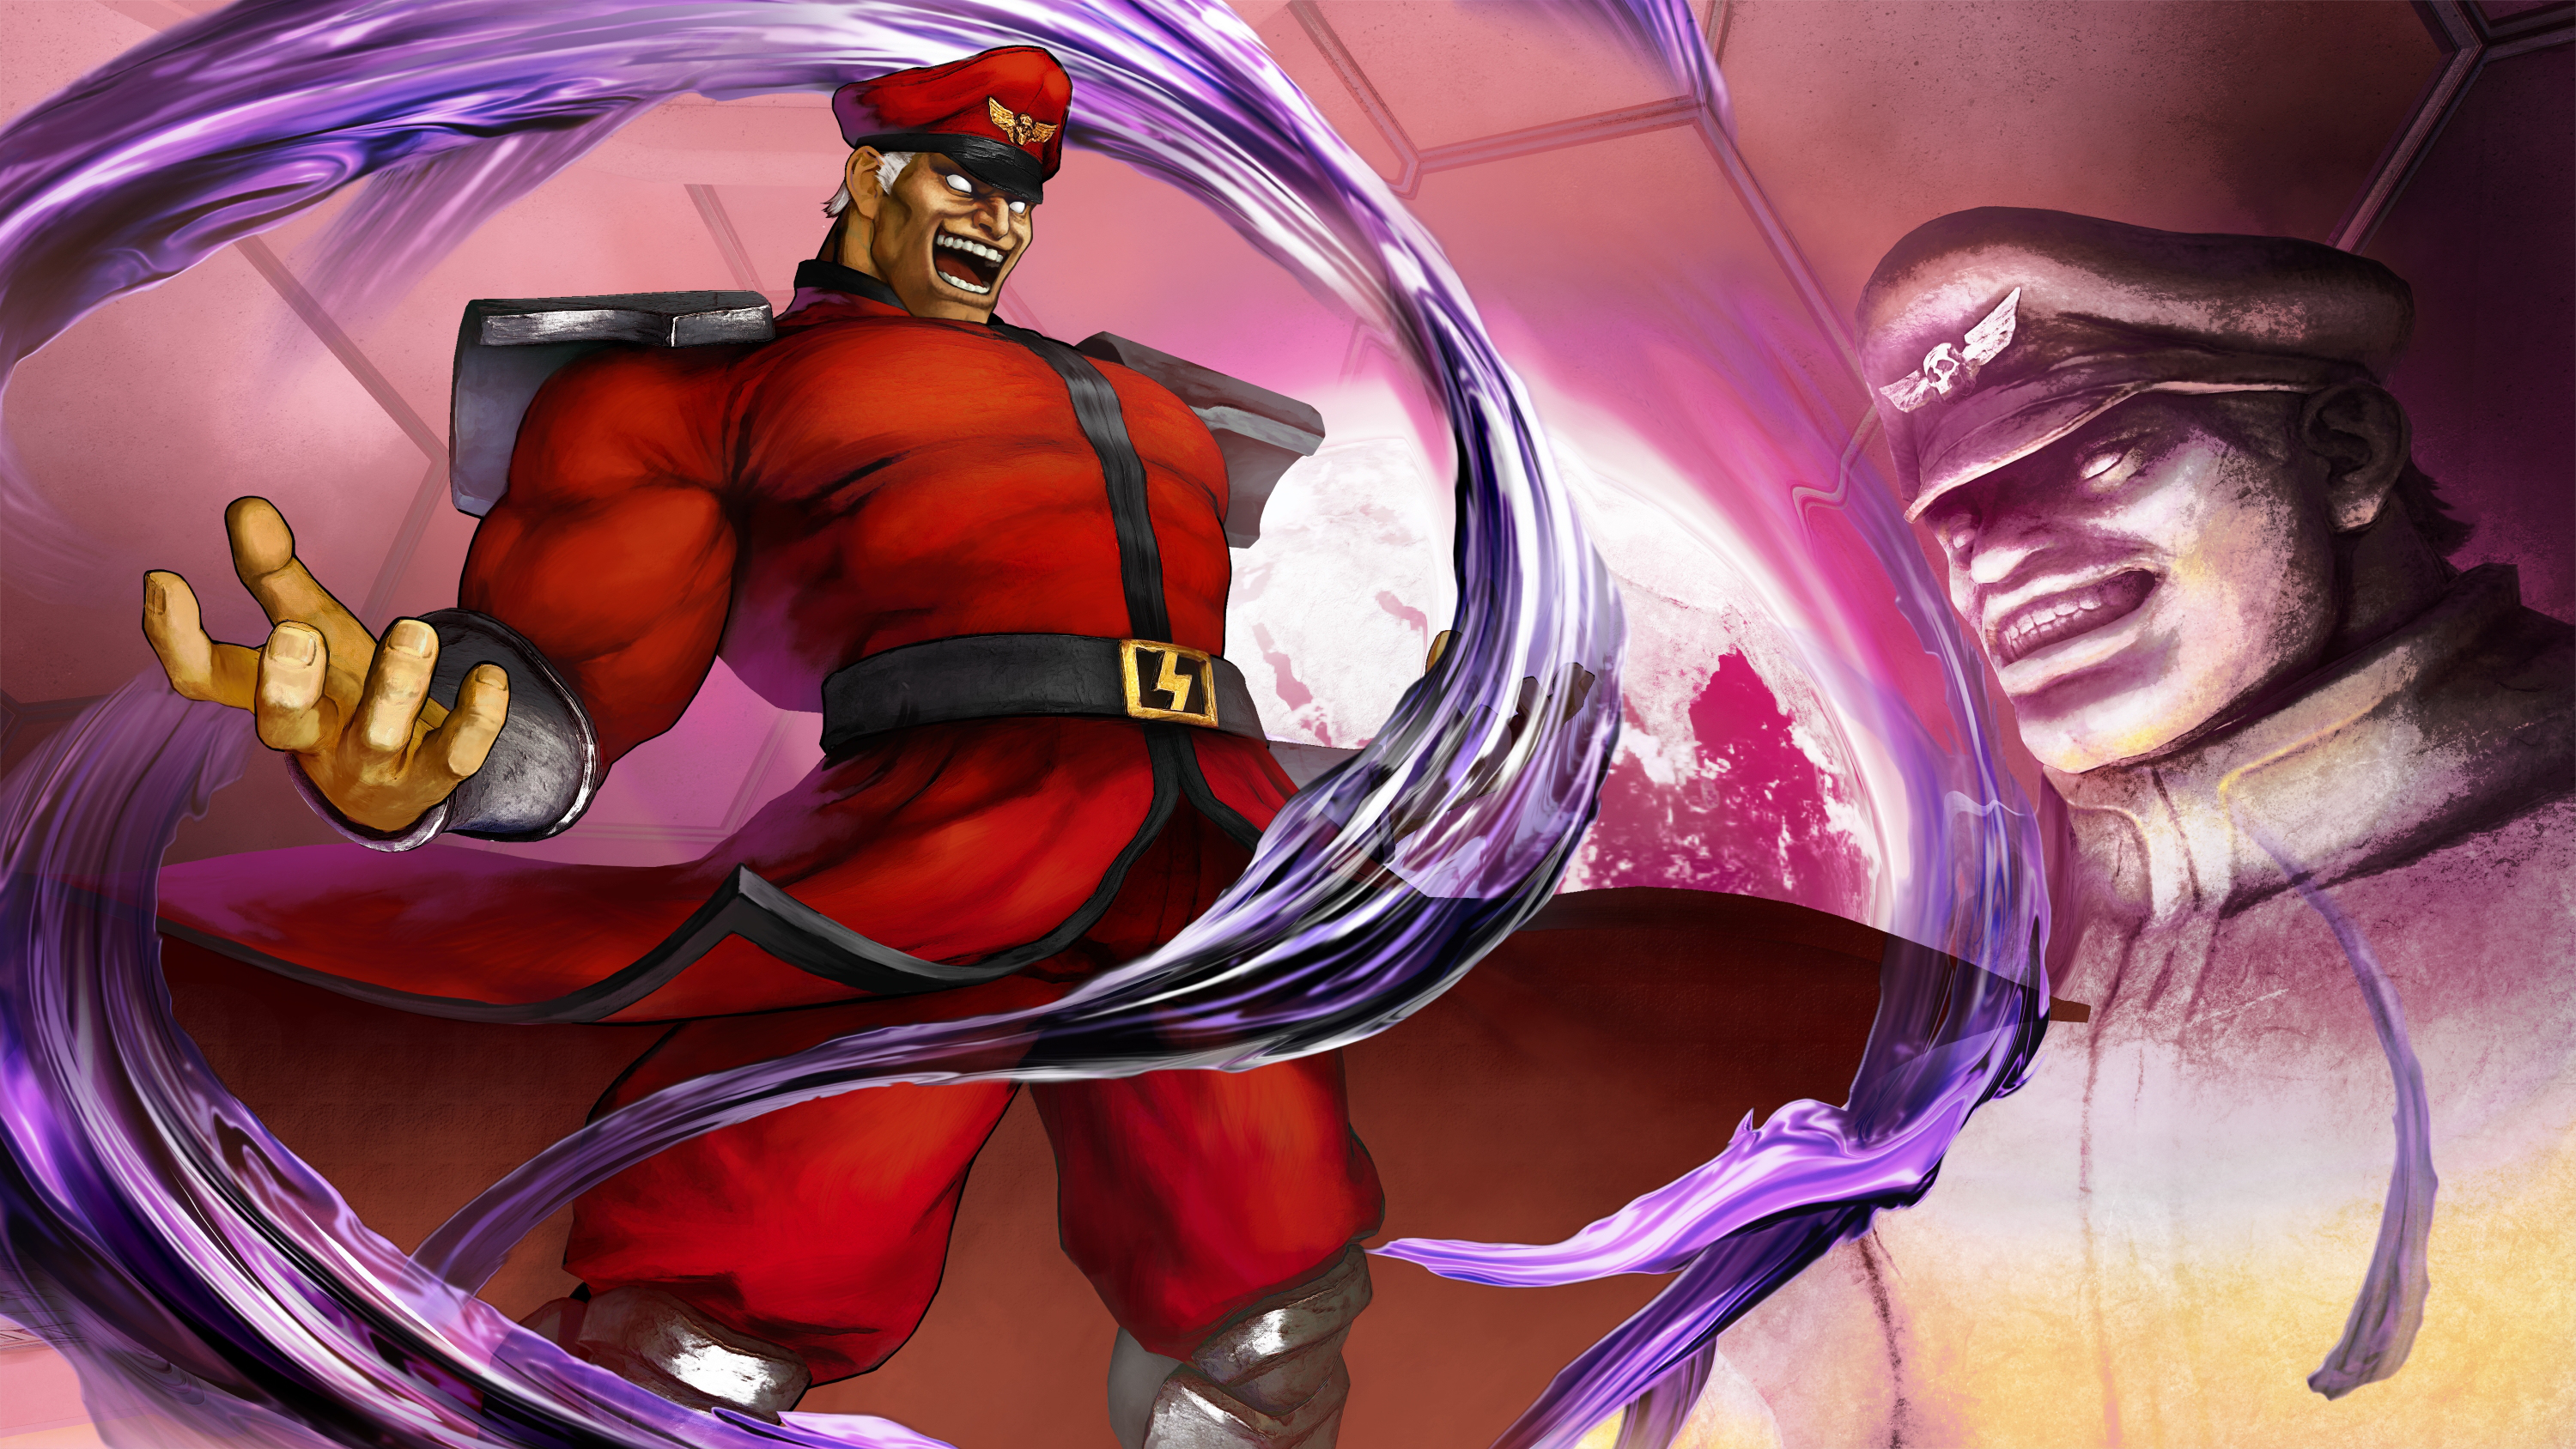 General 3000x1688 Street Fighter V M. bison PlayStation 4 video games video game man video game warriors